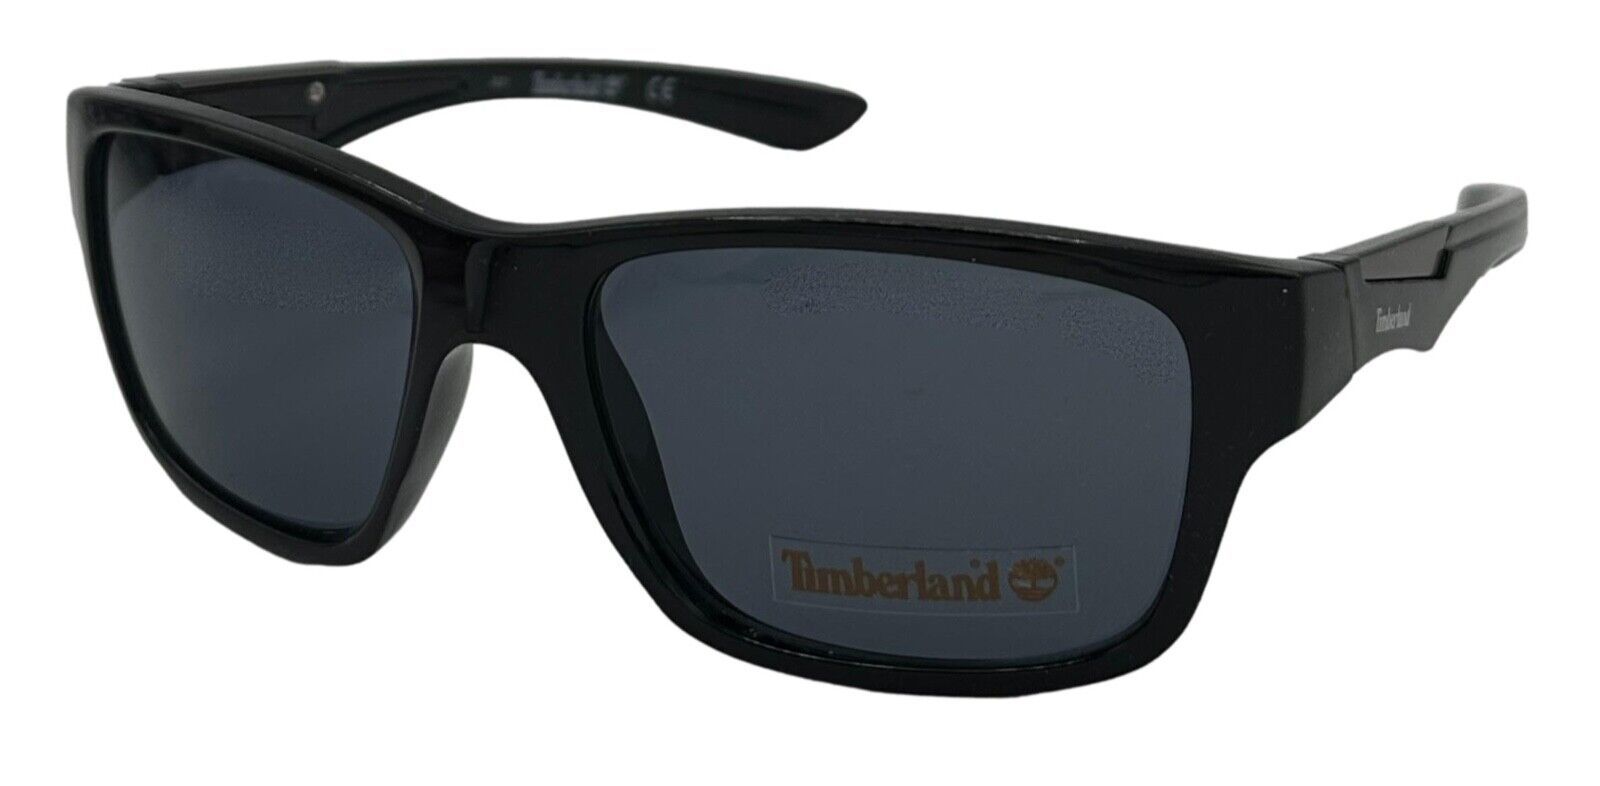 Primary image for Timberland Mens Rectang Shiny  Black Plastic Sunglass,Smoke Lens  TB7155 1A